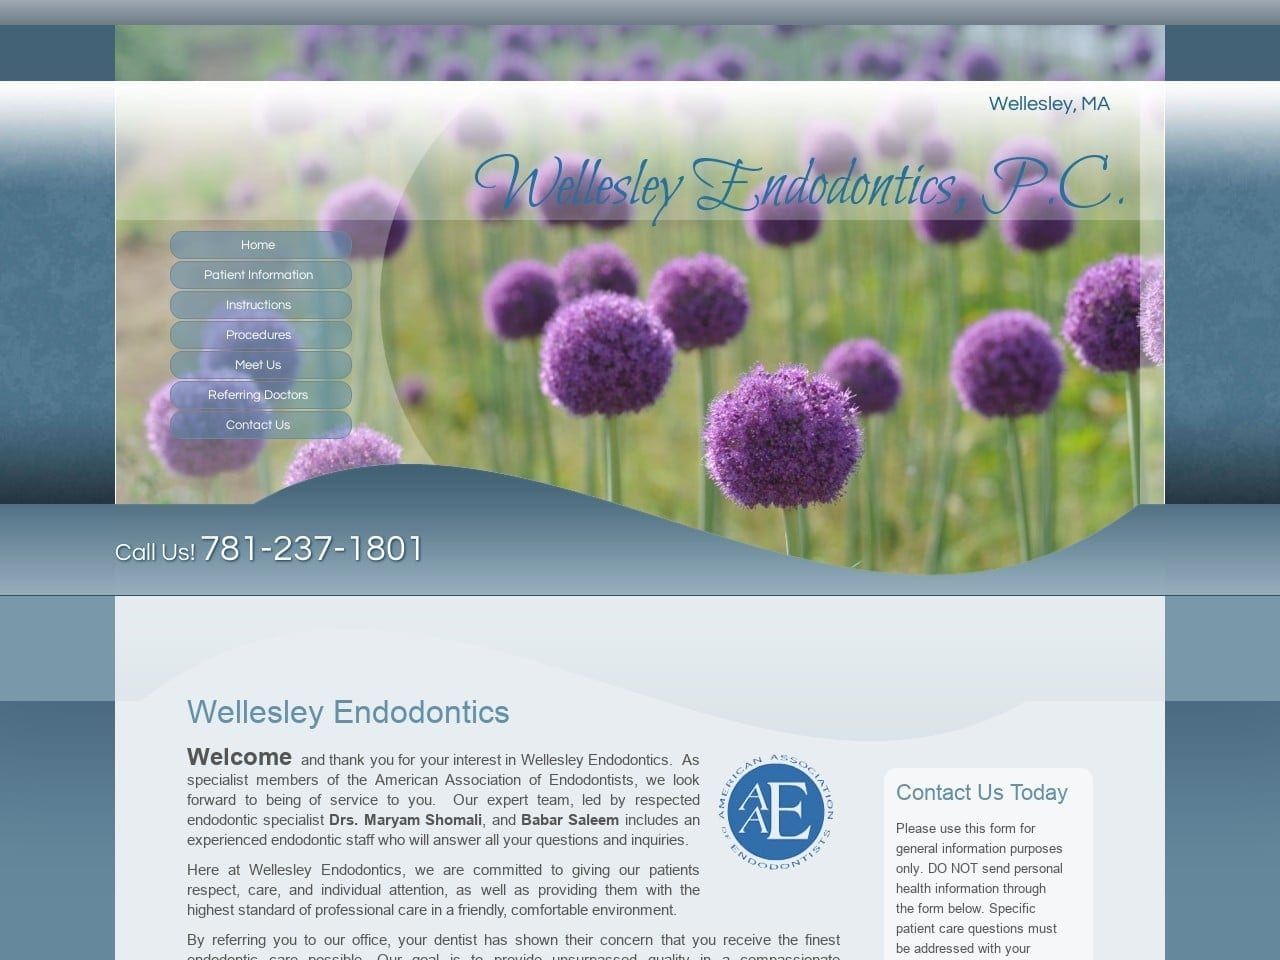 Wellesley Endodontics Shomali Maryam DDS Website Screenshot from wellesleyendo.com